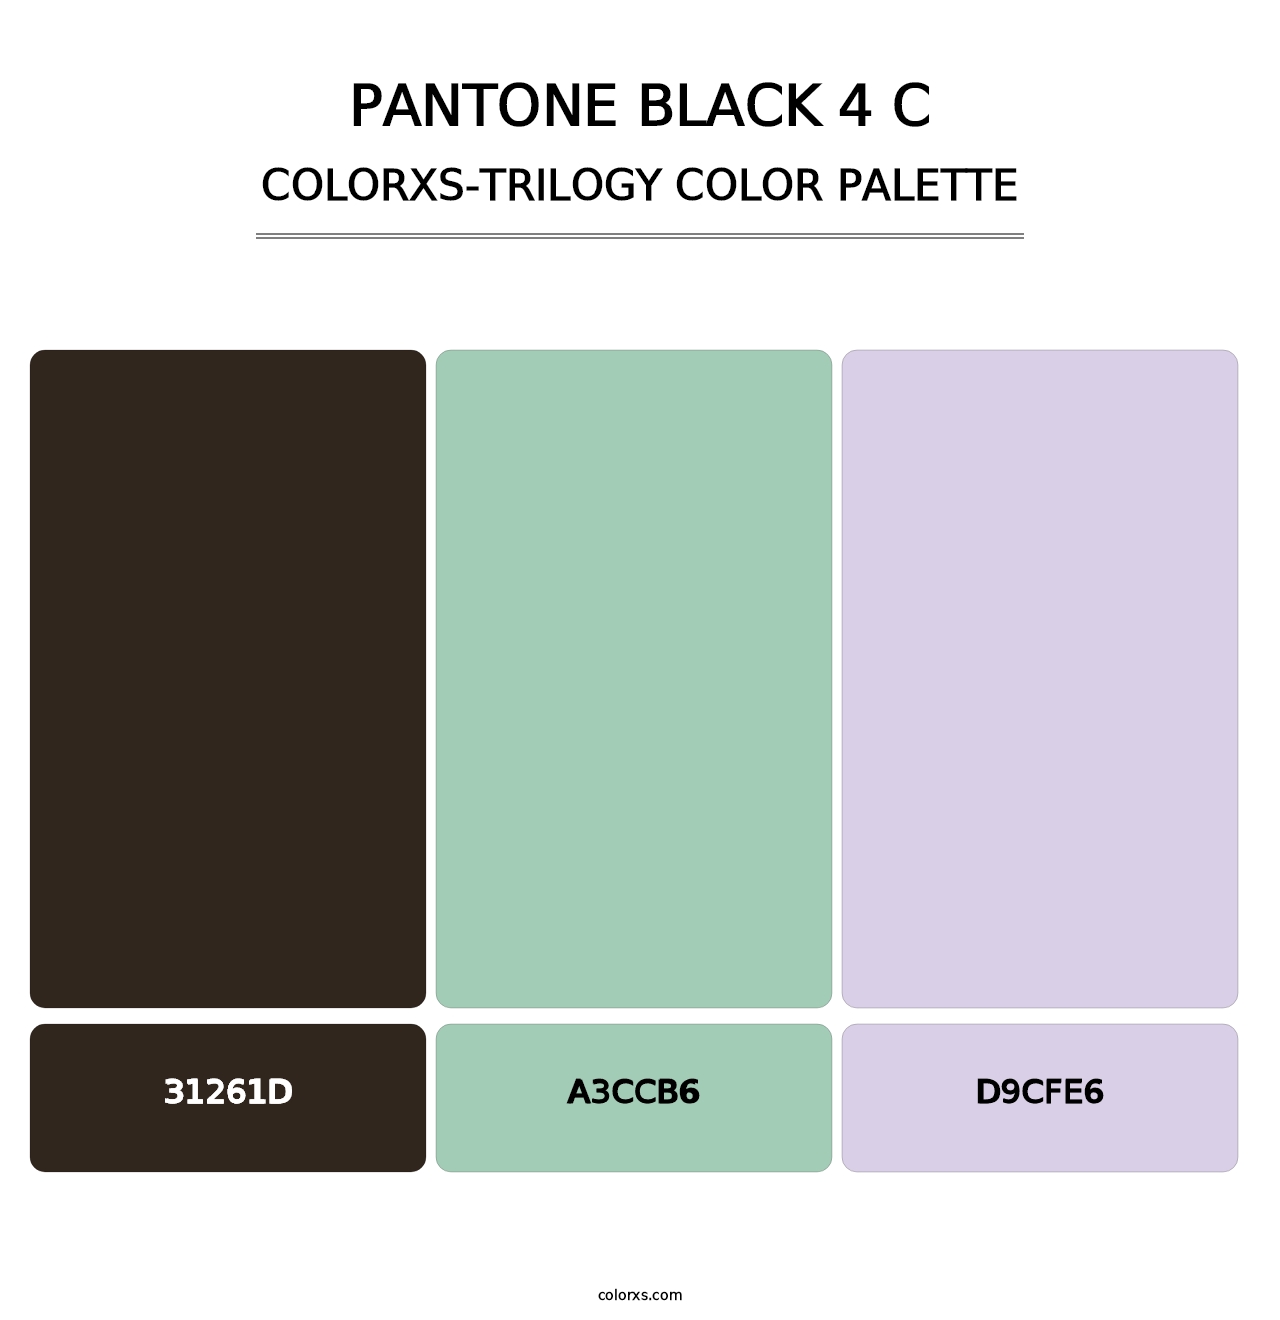 PANTONE Black 4 C - Colorxs Trilogy Palette